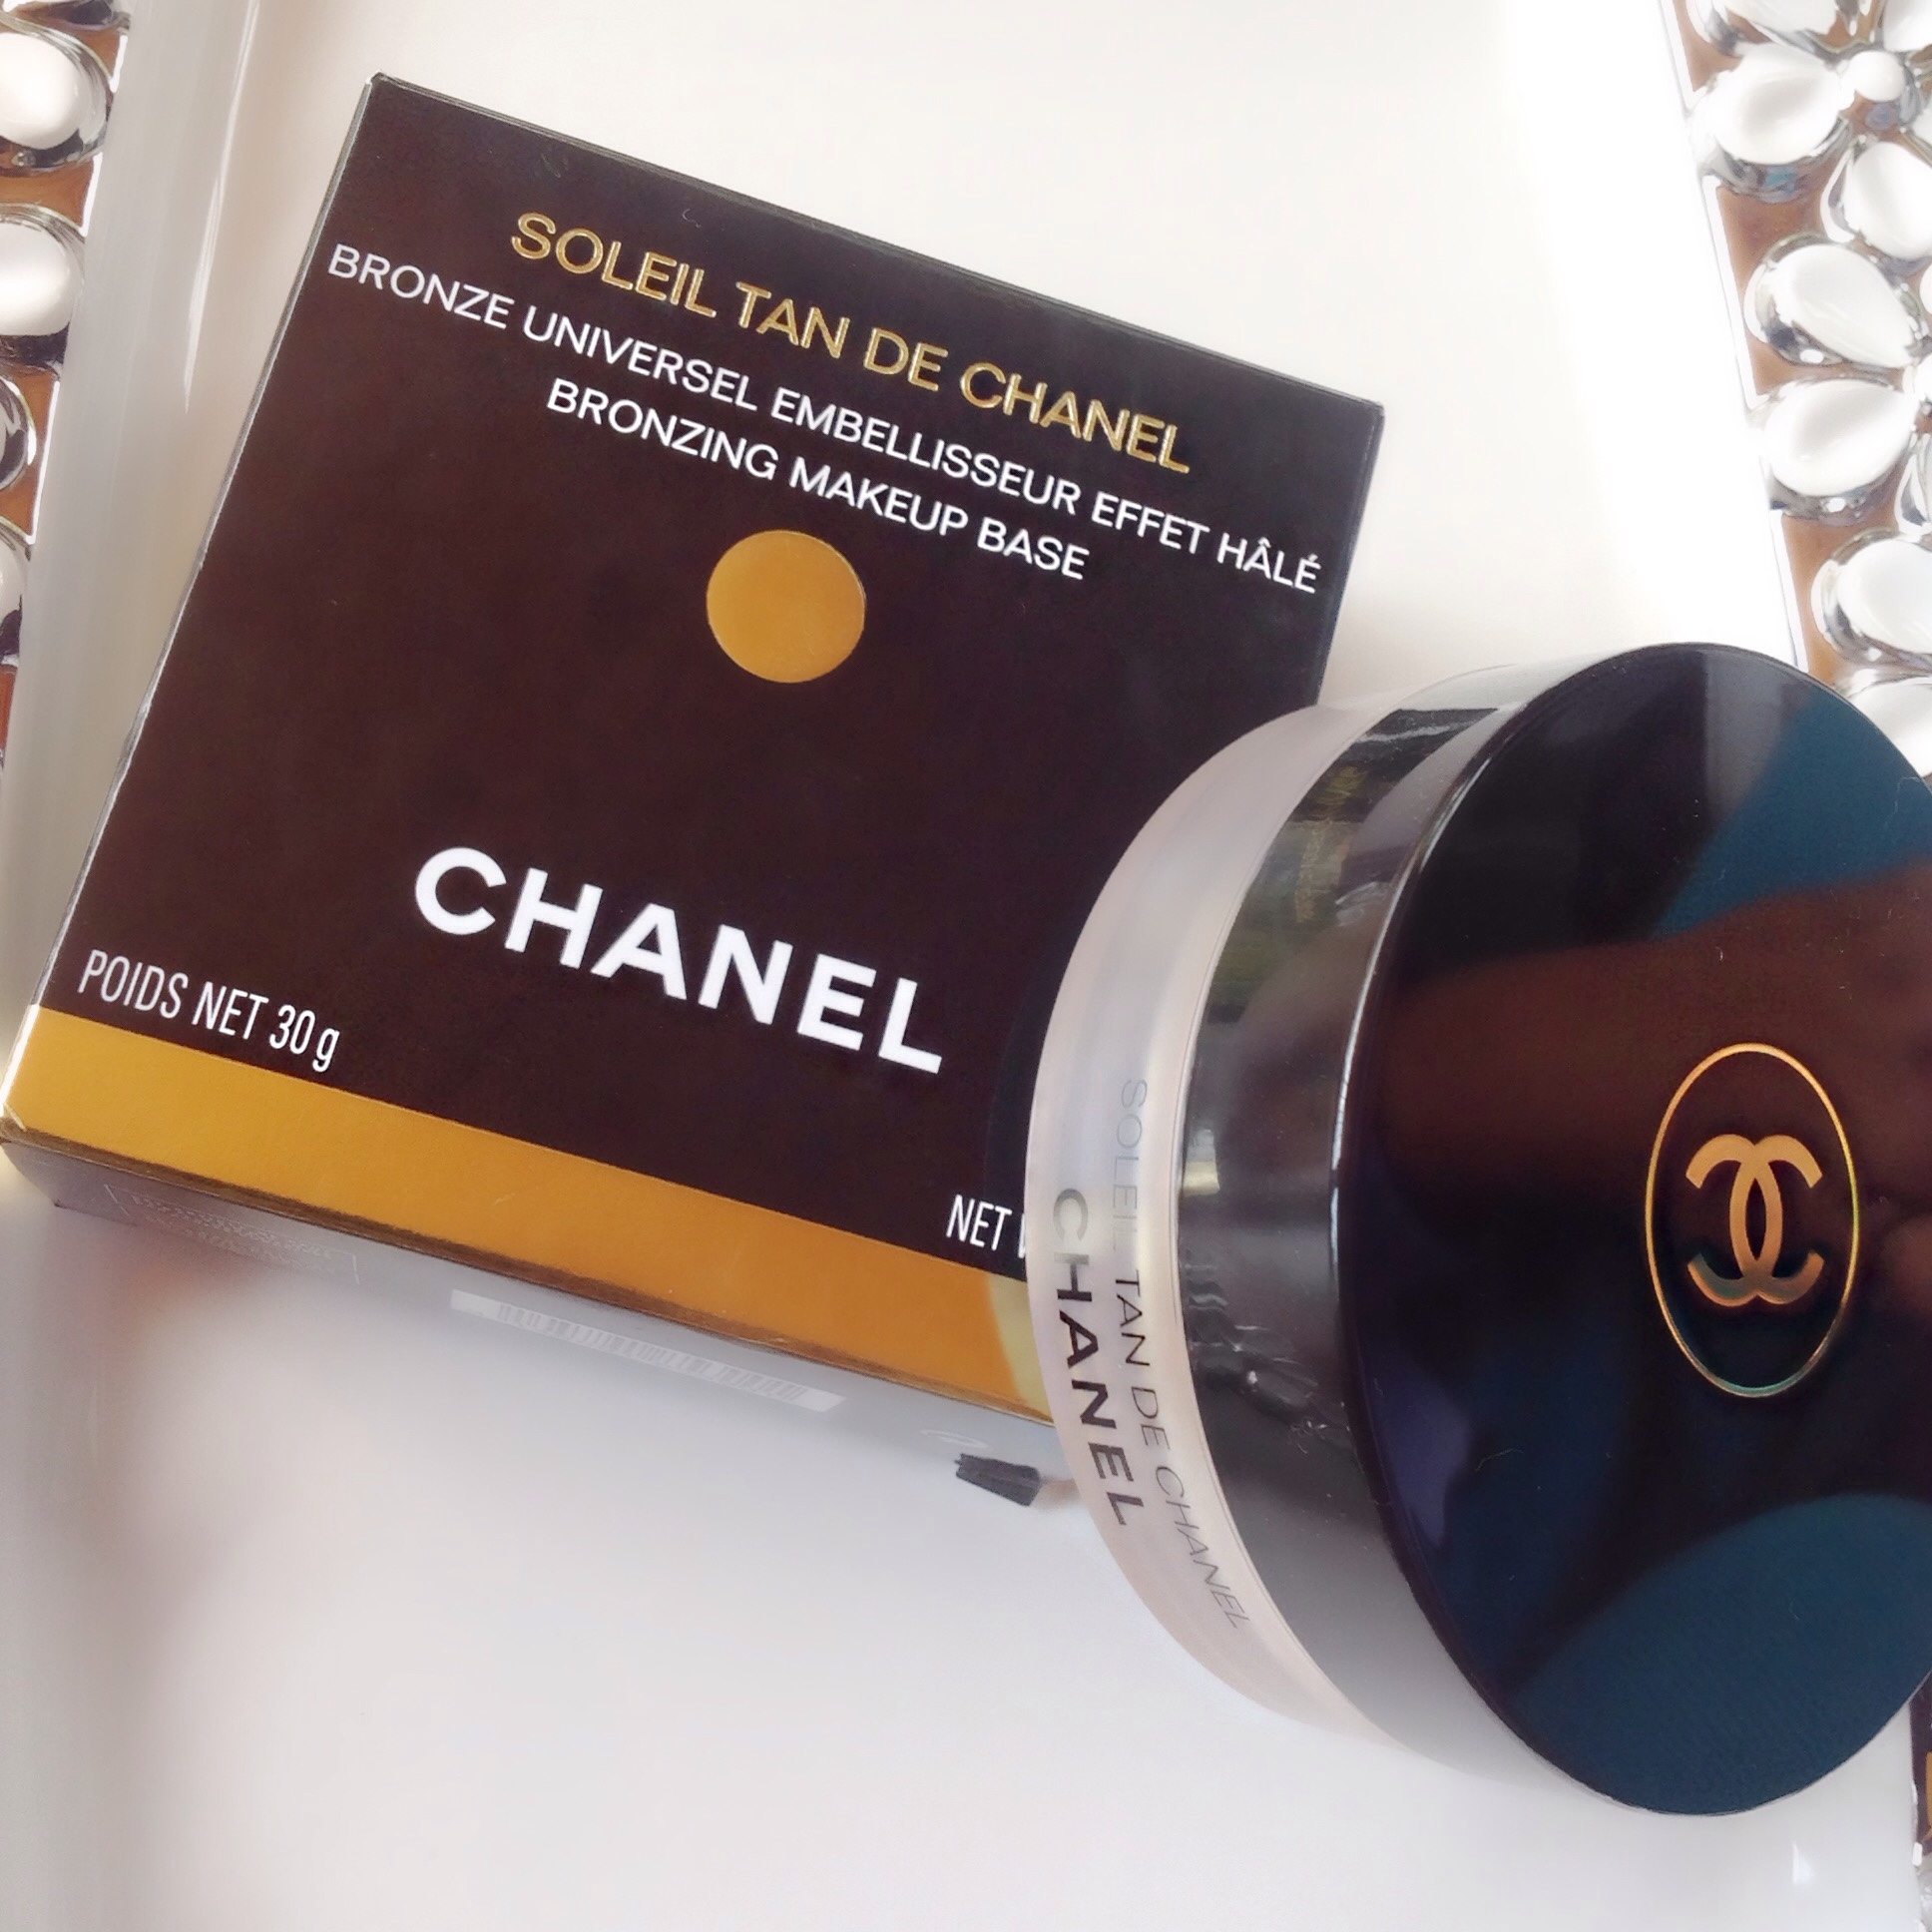 Chanel SOLEIL TAN DE CHANEL Bronzing Makeup Base – Review